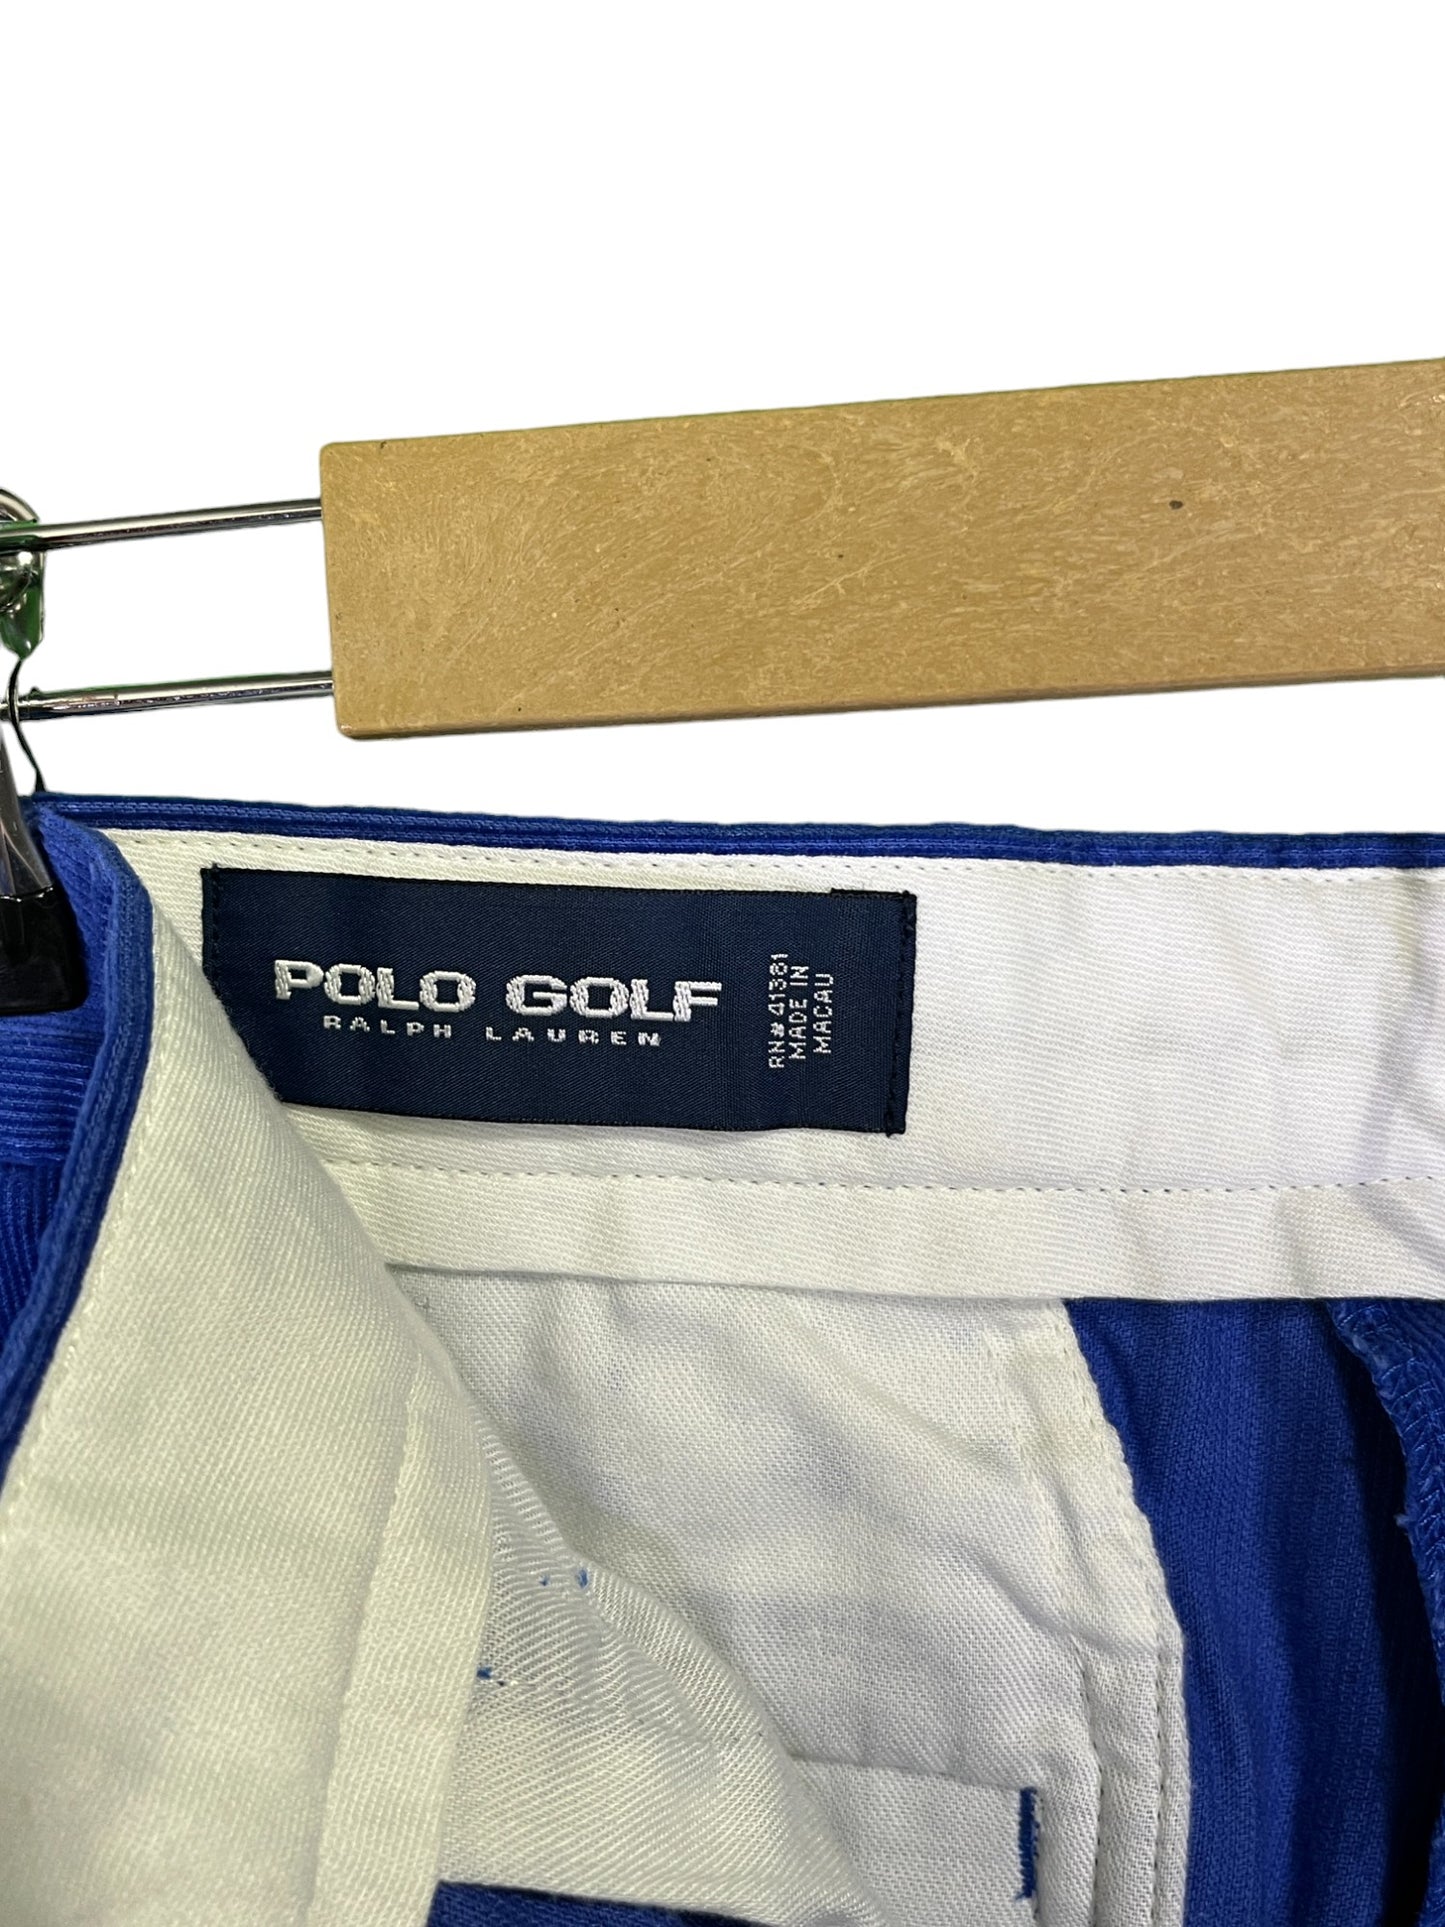 Vintage Polo Golf Blue Corduroy Trousers Size 36x30